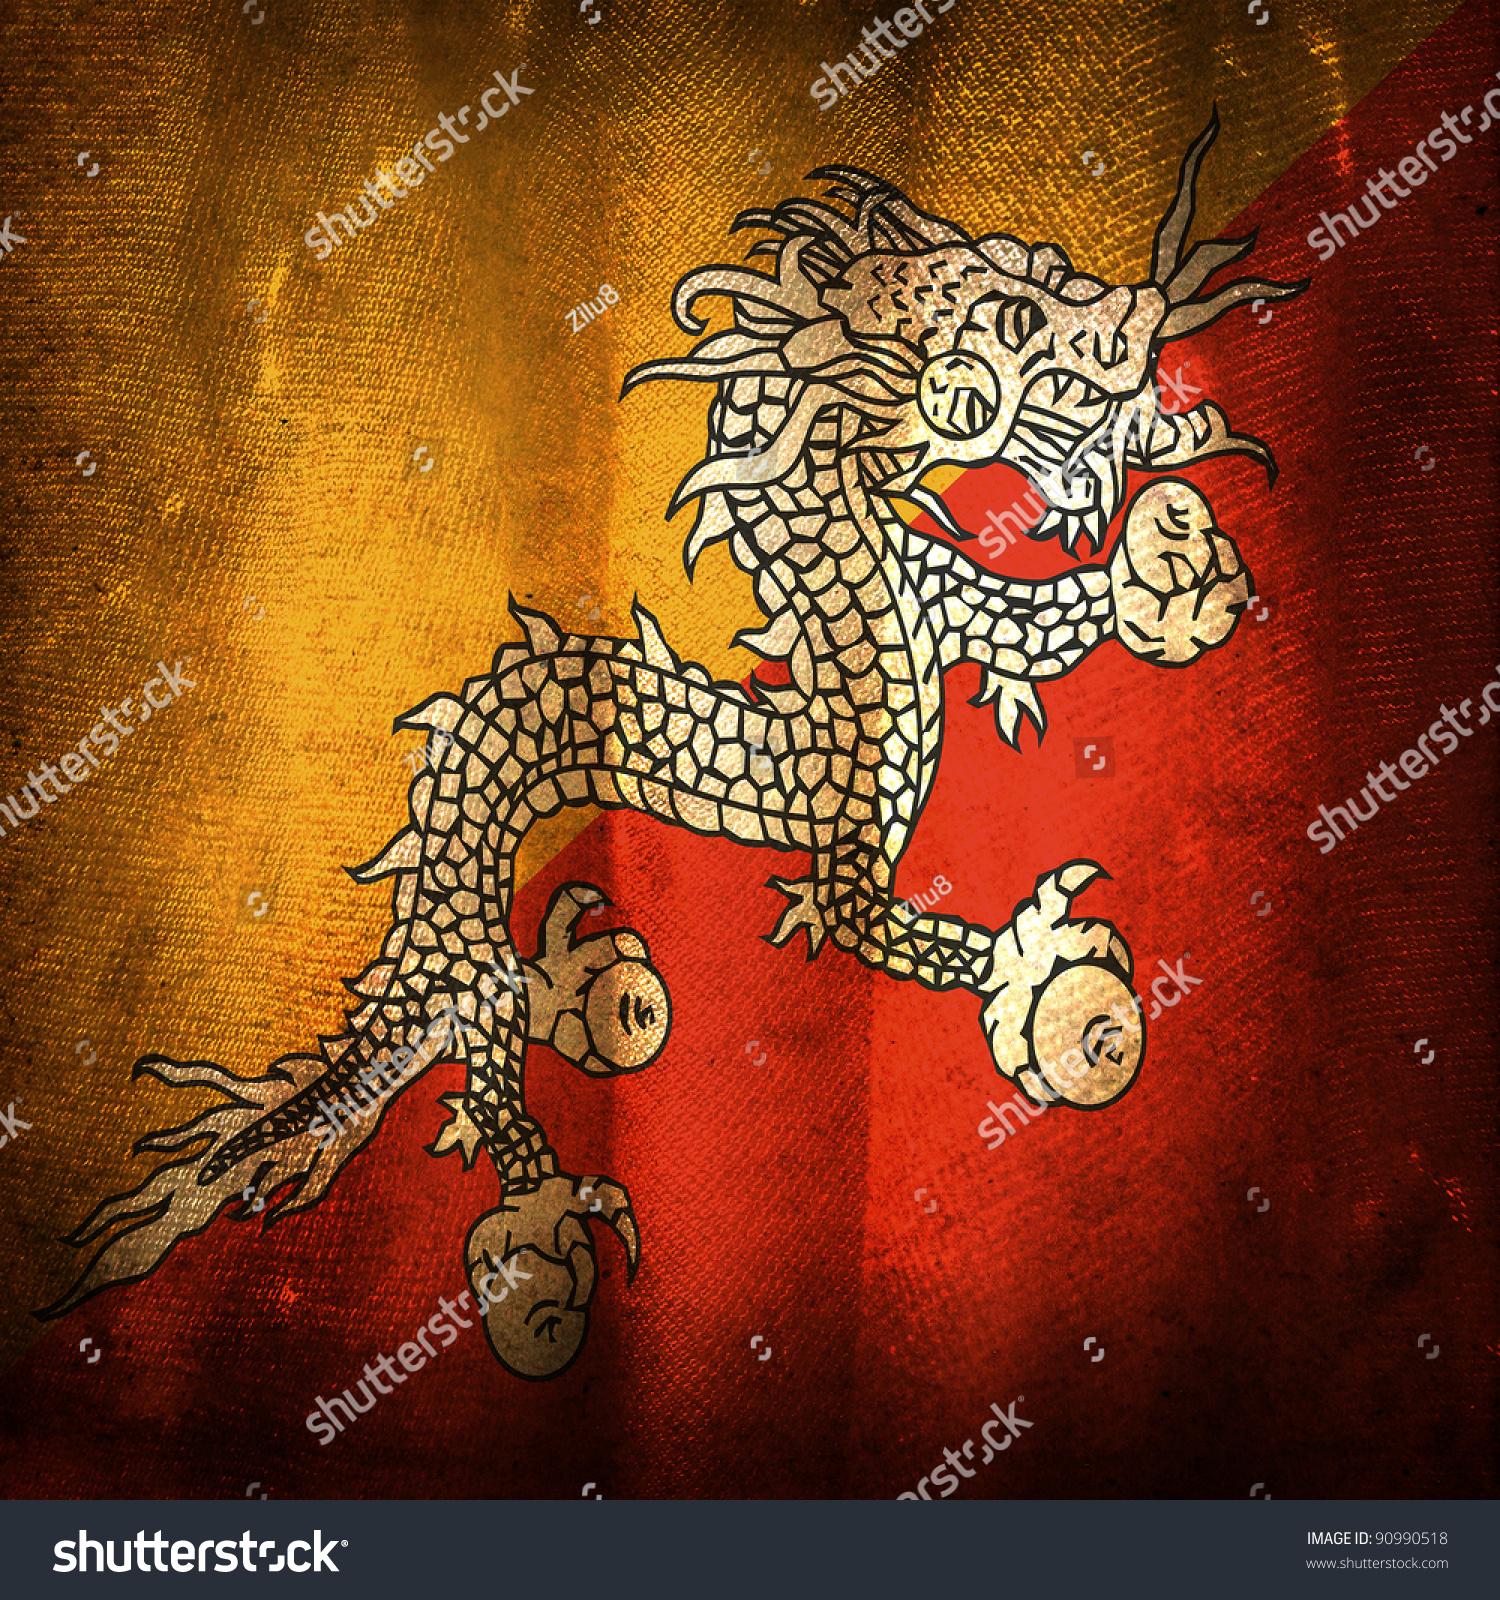 Old Grunge Flag Bhutan Stock Photo (Safe to Use) 90990518 - Shutterstock